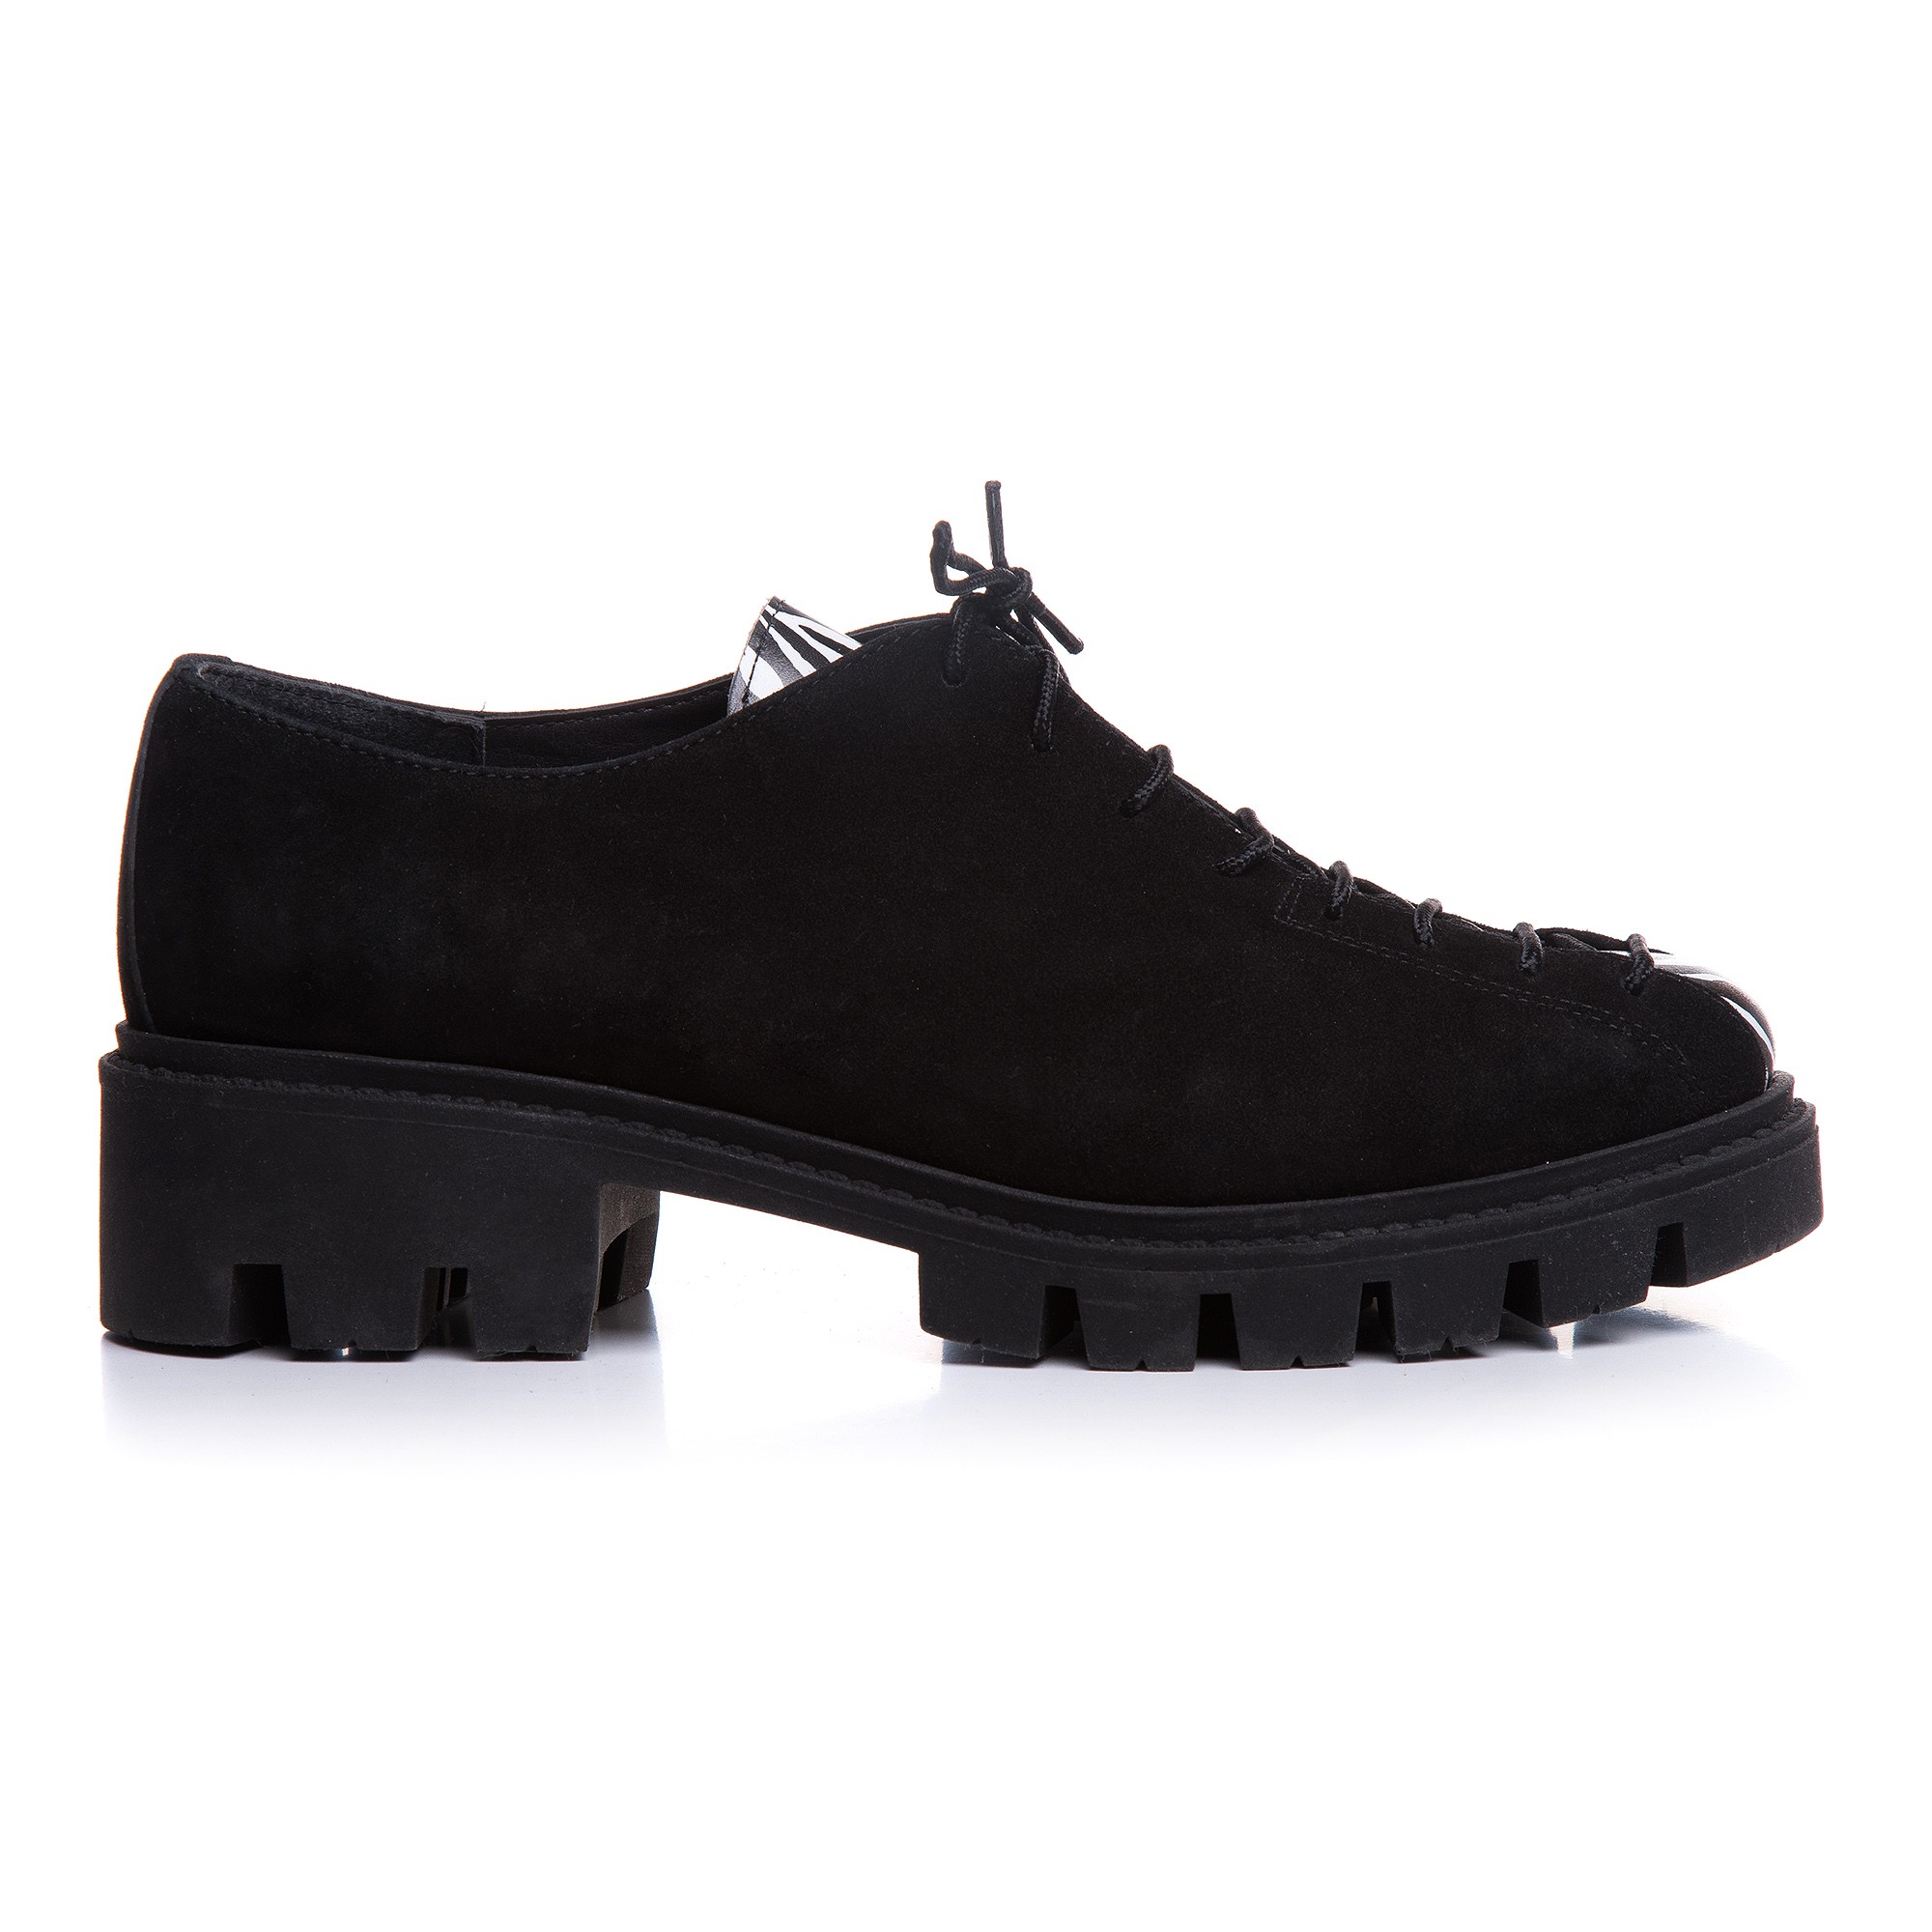 Pantofi Talpa Bocanc Piele Negru/Zebra  V70 - orice culoare